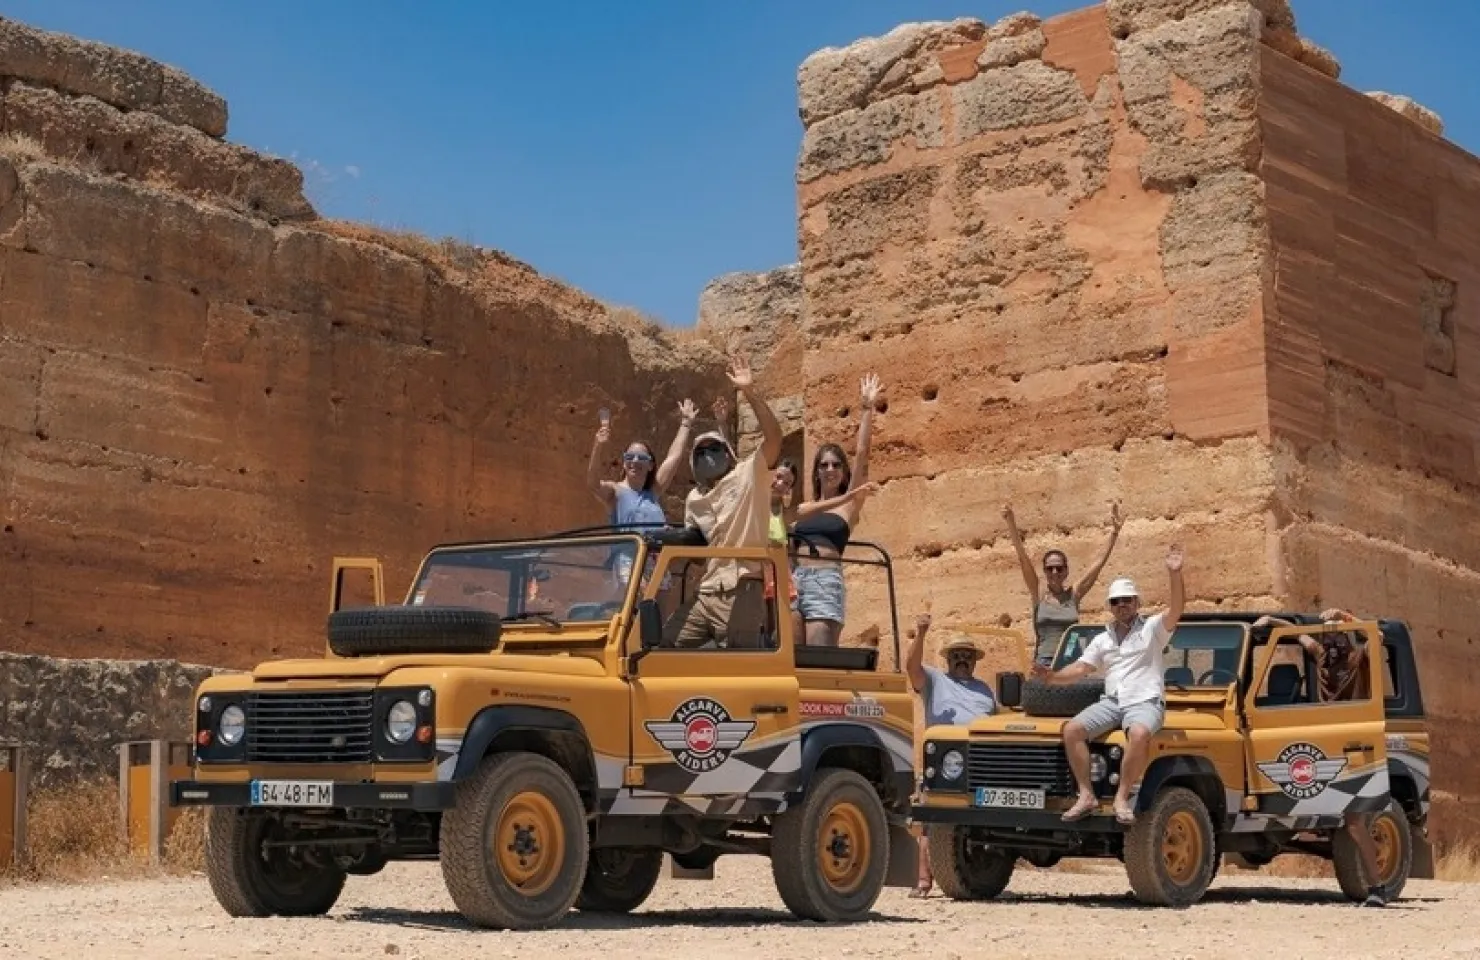 Full Day Private Jeep Safari - Algarve buggies tours